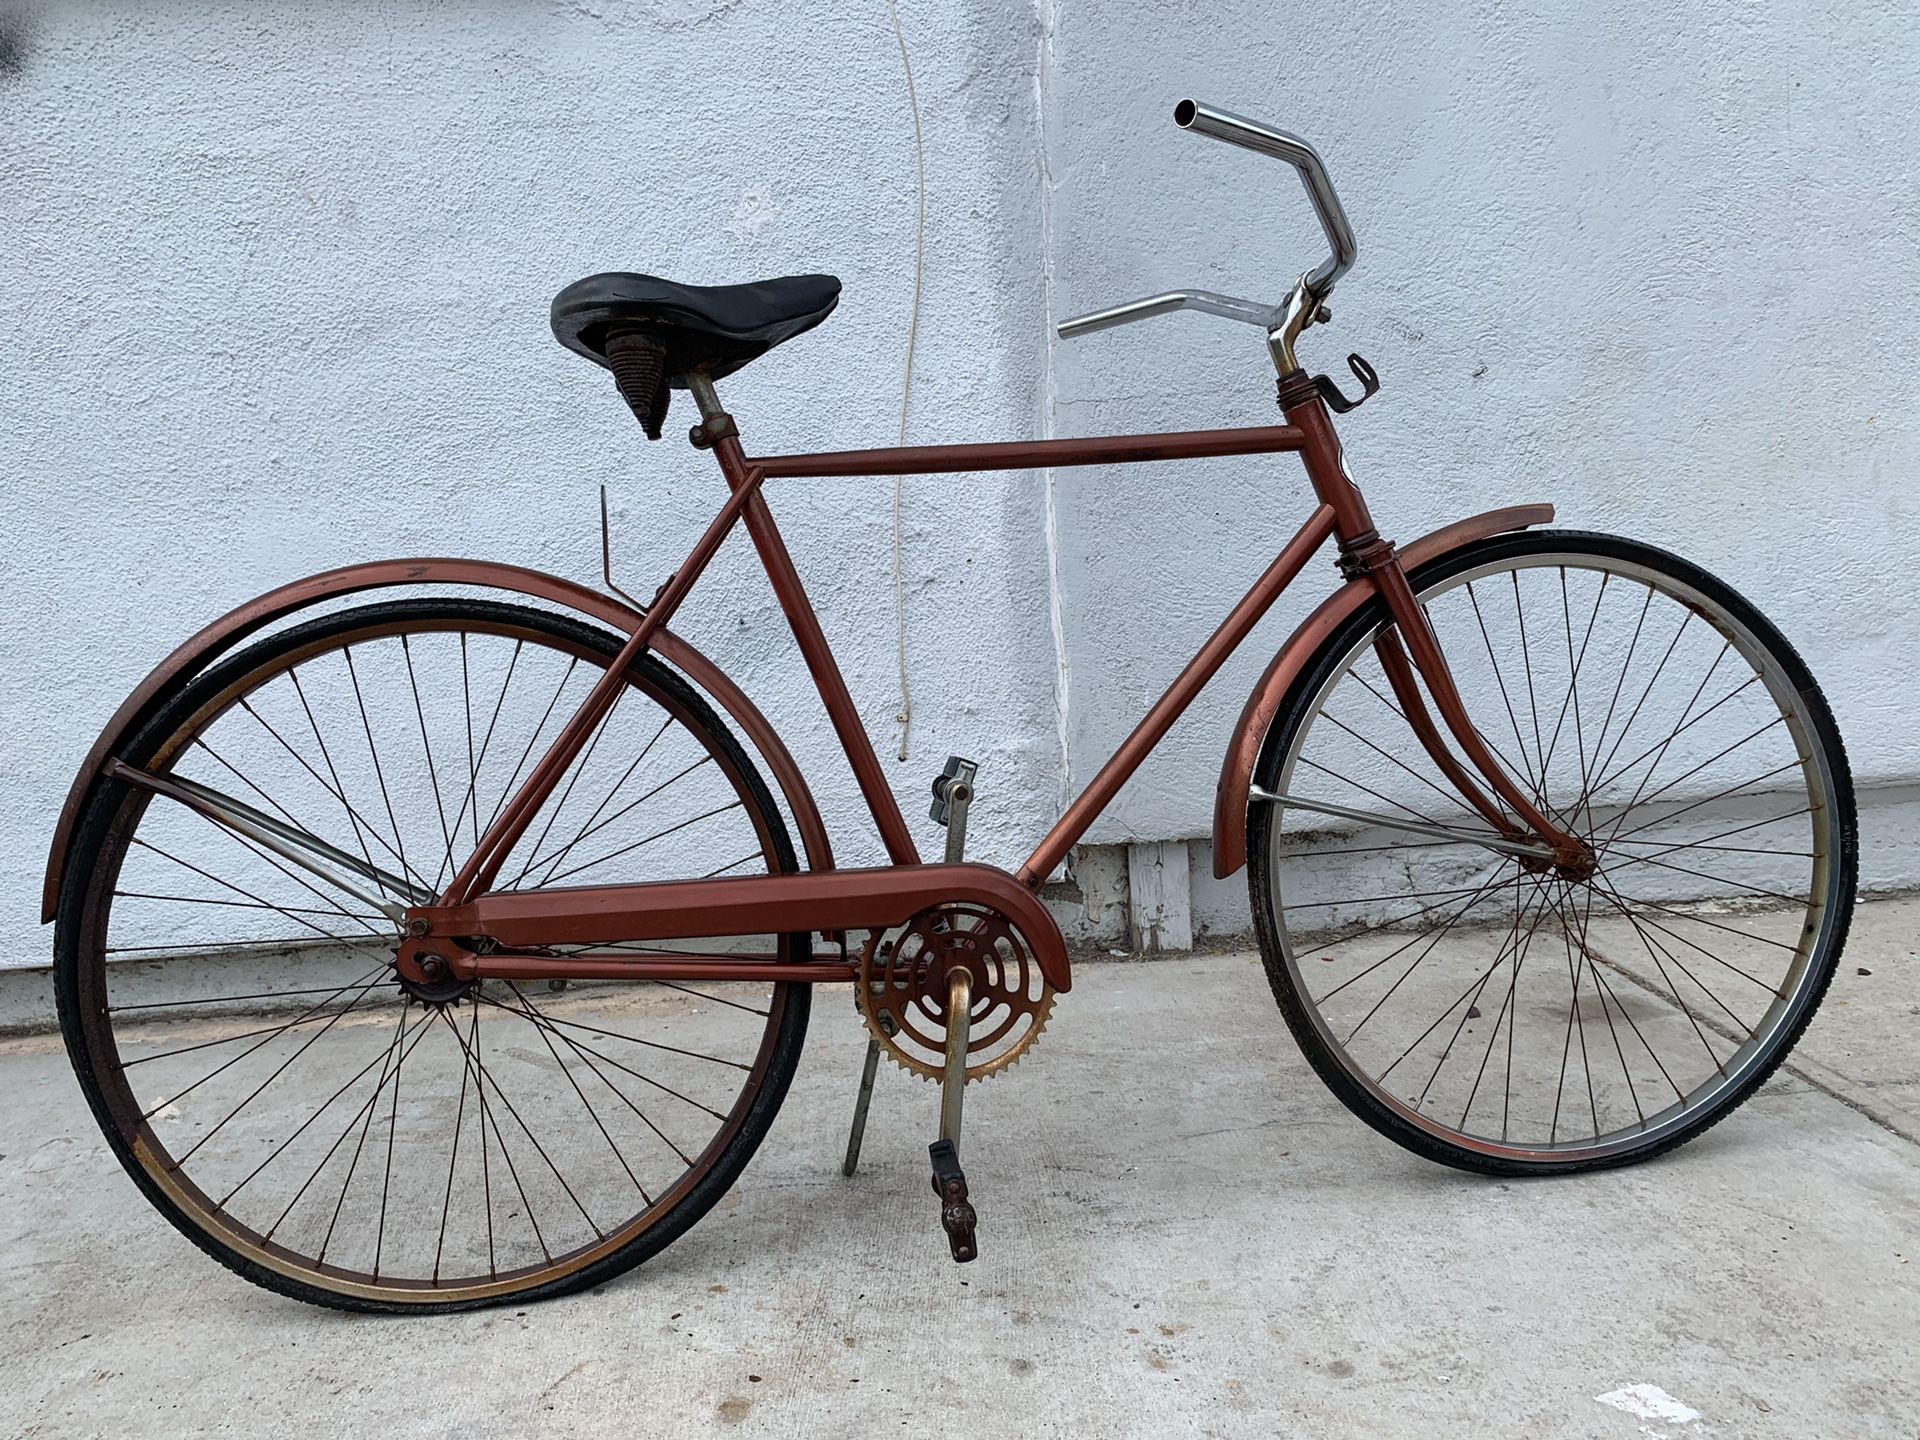 Sears Free Spirit 26” Single Speed Antique Bike/ Cruiser/ Road Bike Bronze Color Needs Tubes & Chain $50